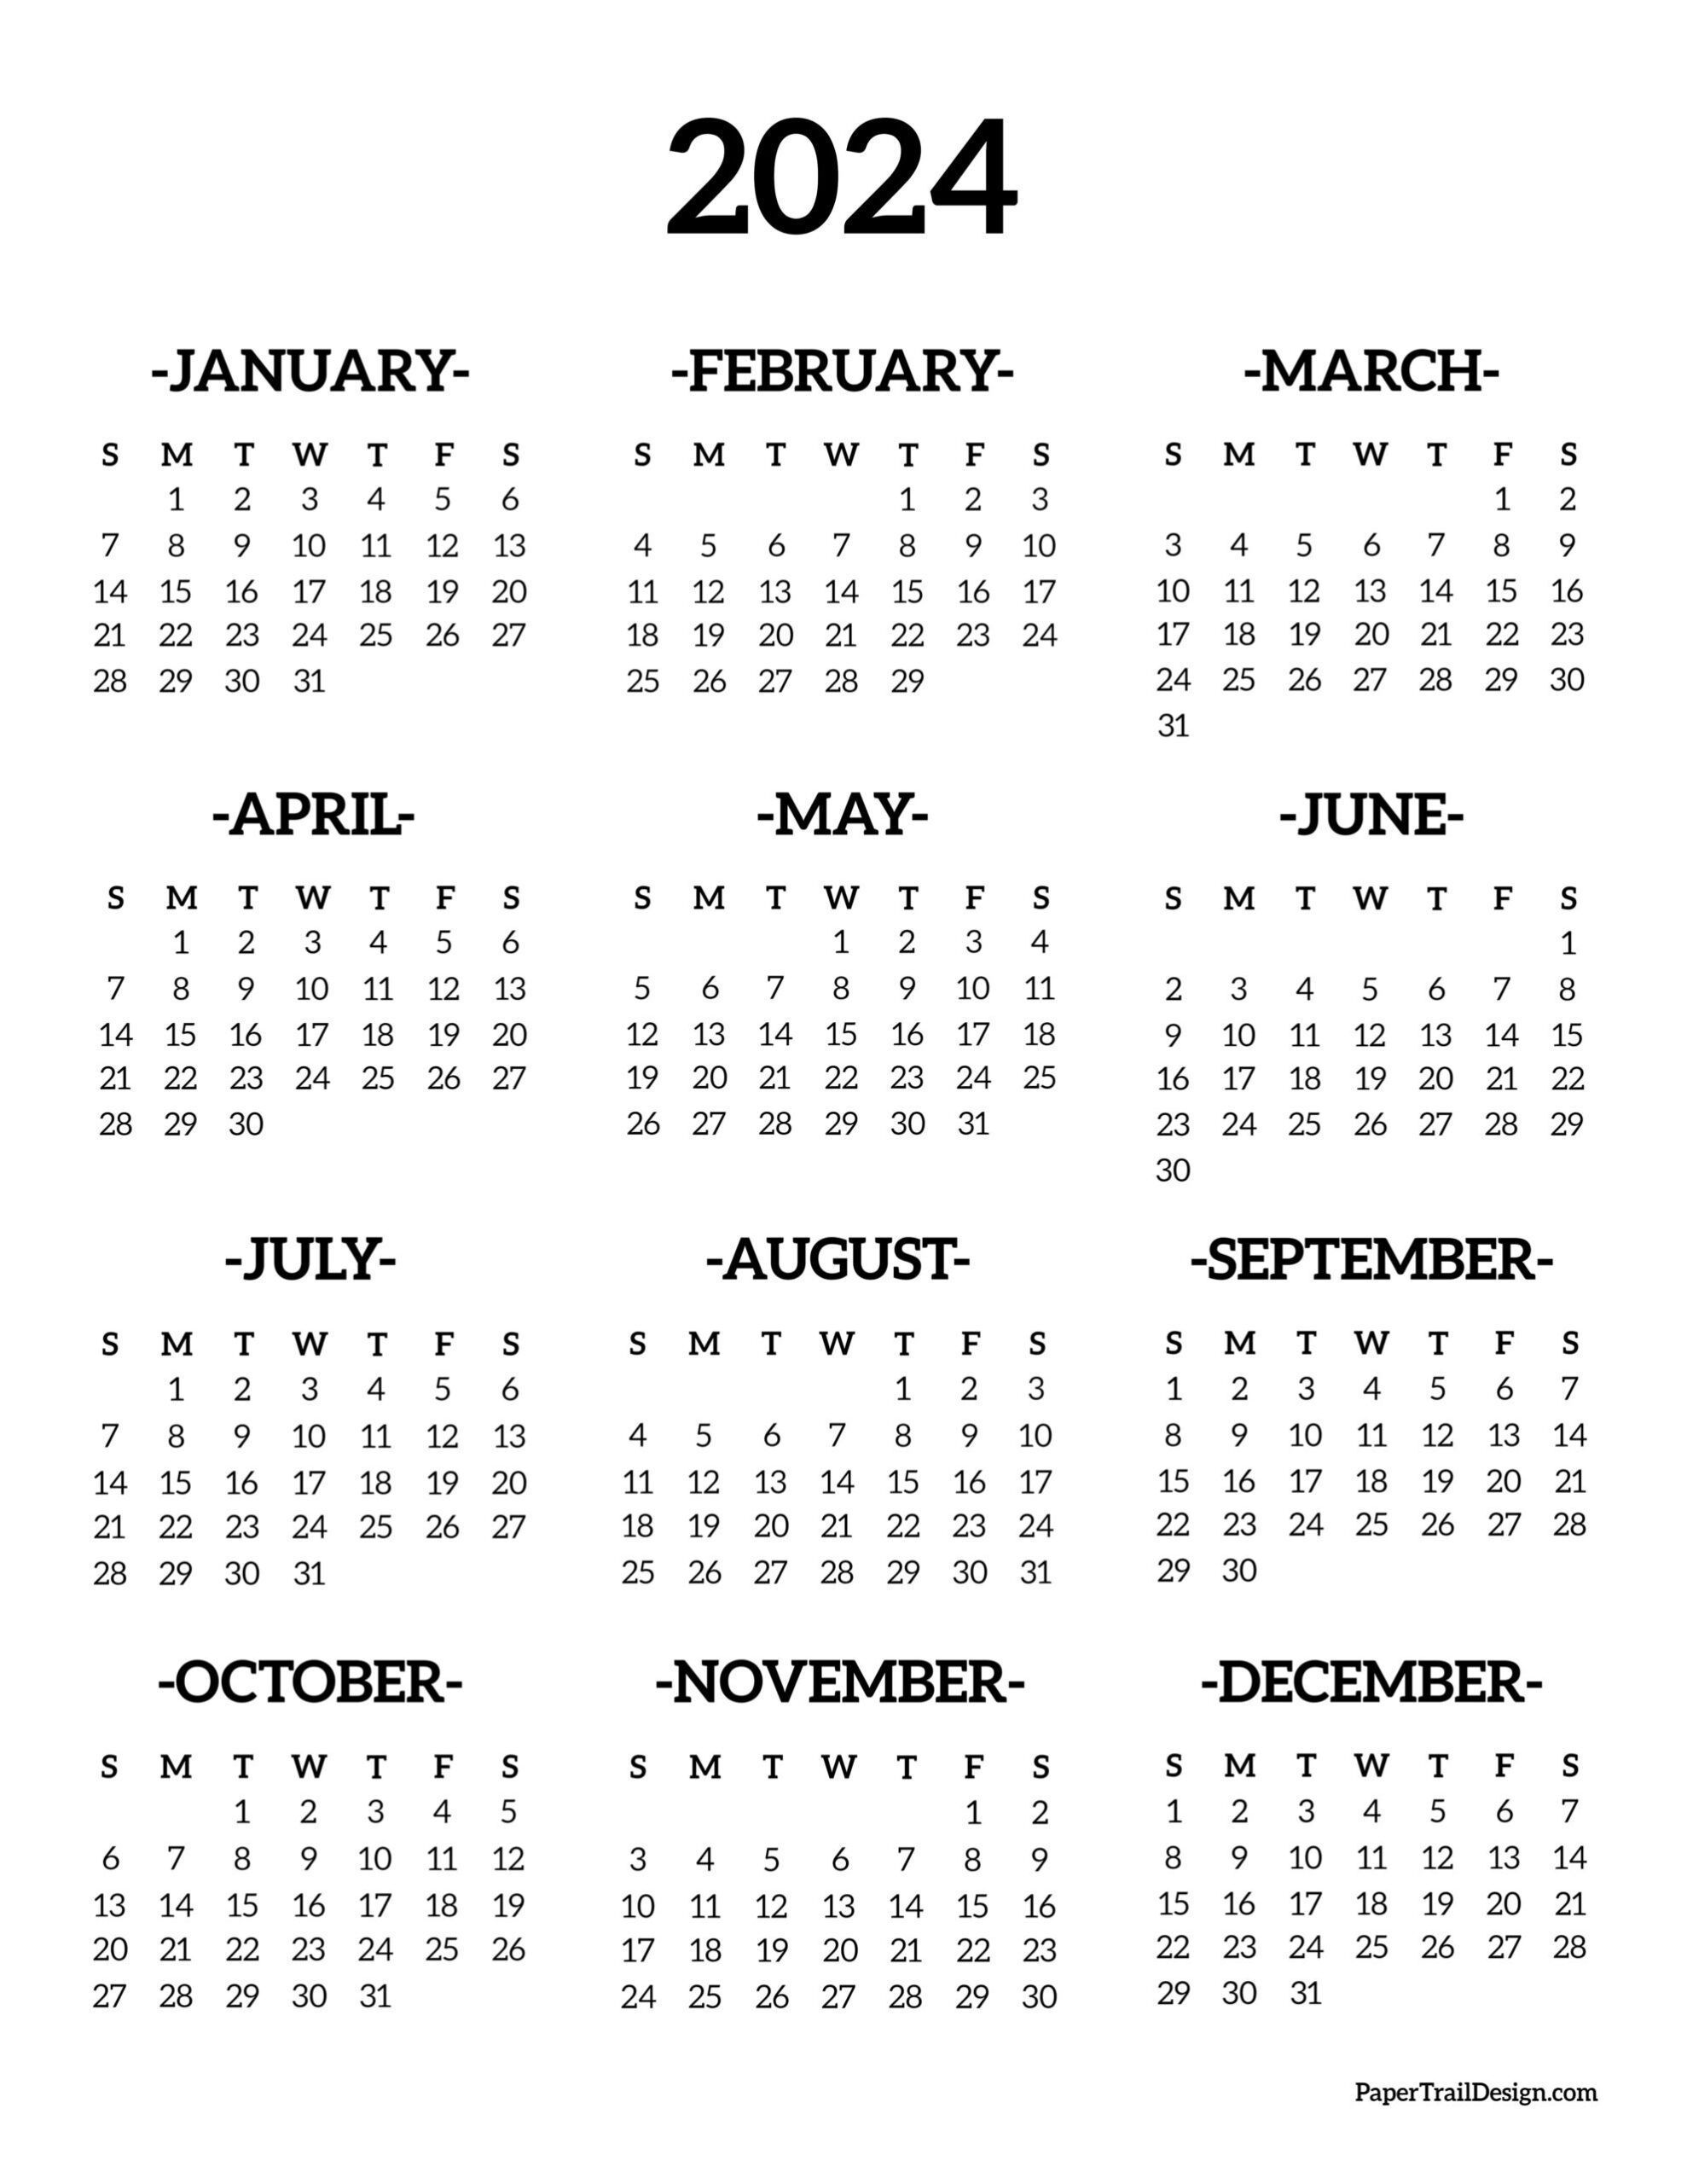 Calendar 2024 Printable One Page - Paper Trail Design | Printable Calendar For 2024